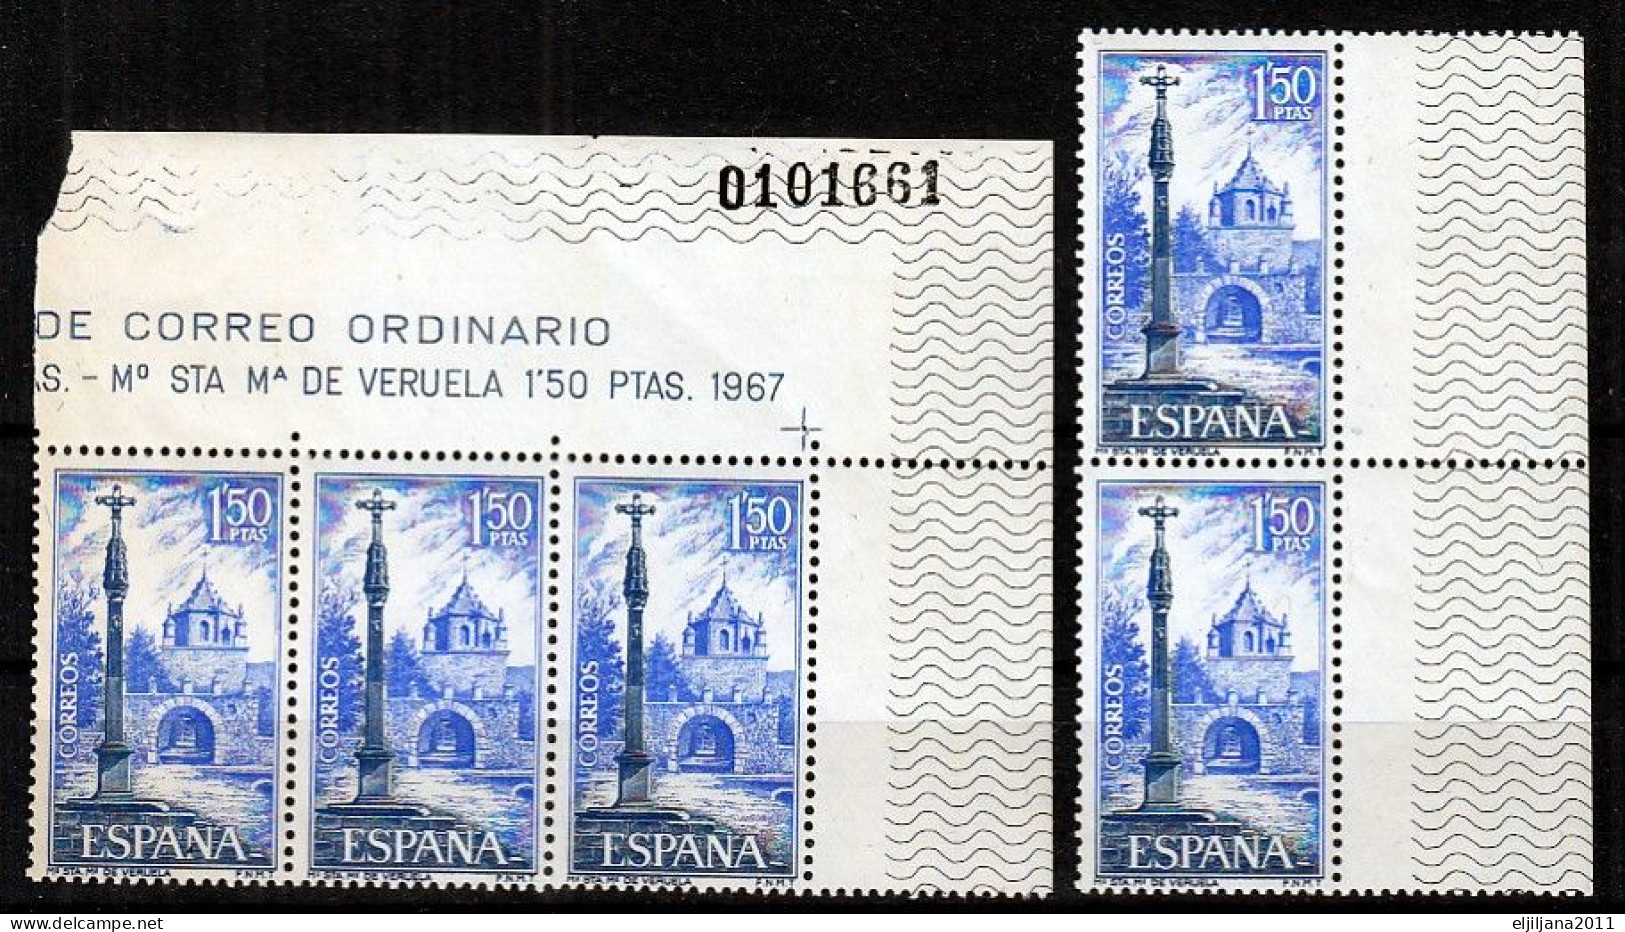 ⁕ SPAIN / ESPANA 1967 ⁕ Monasteries And Abbeys Mi.1728 - 1730 X 5 ⁕ MNH - See Scan - Ungebraucht